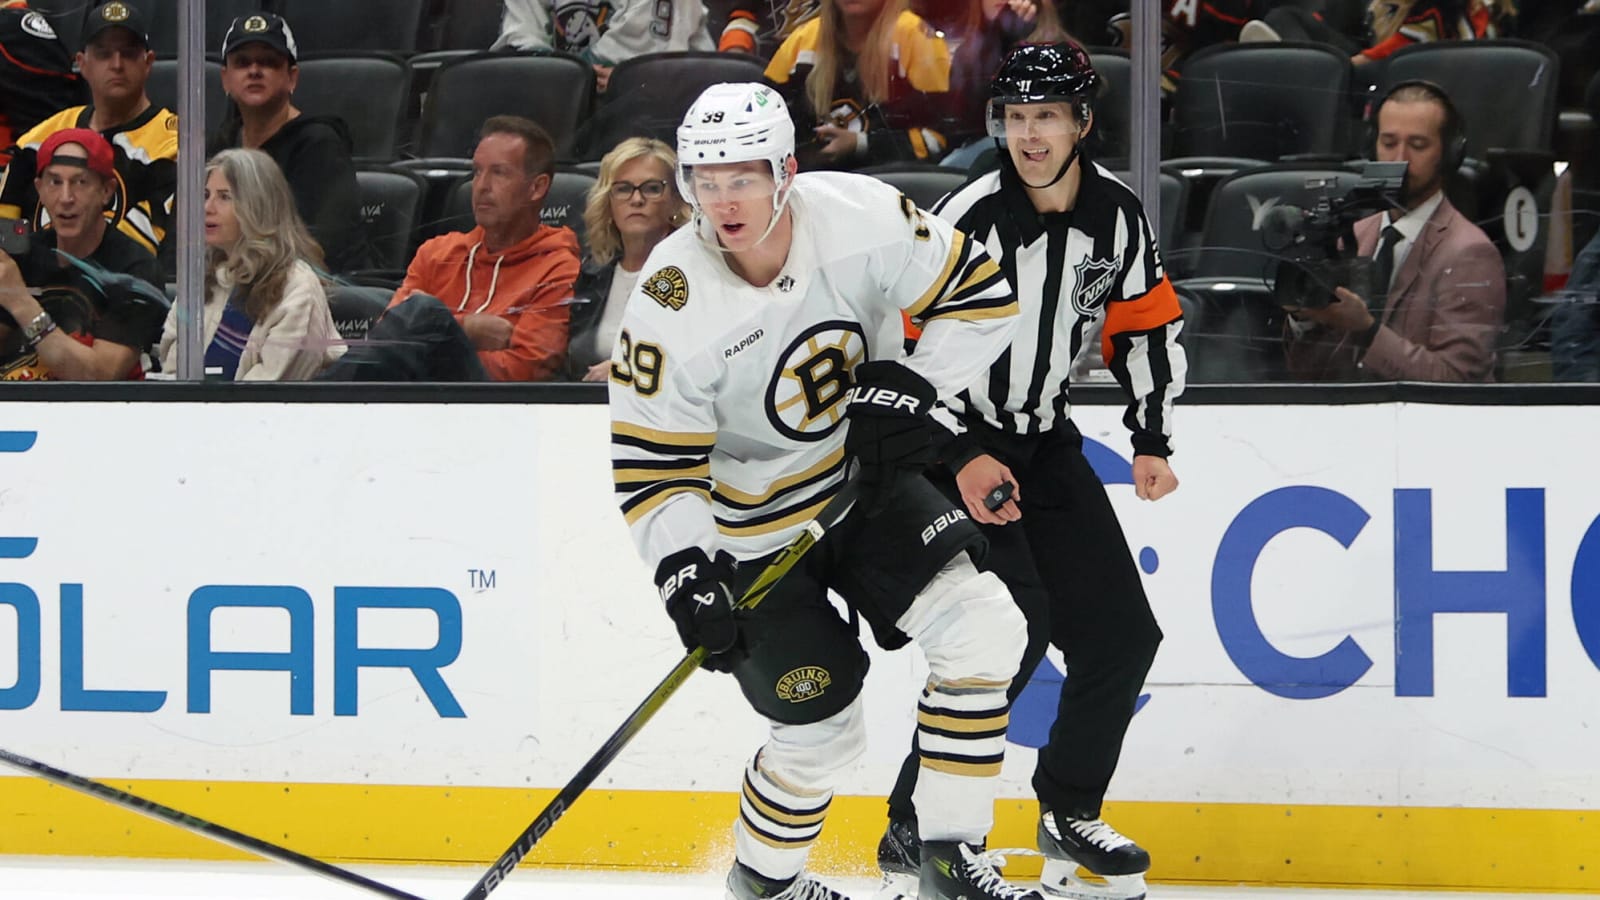 Colageo: Boston Bruins explore Morgan Geekie’s upside